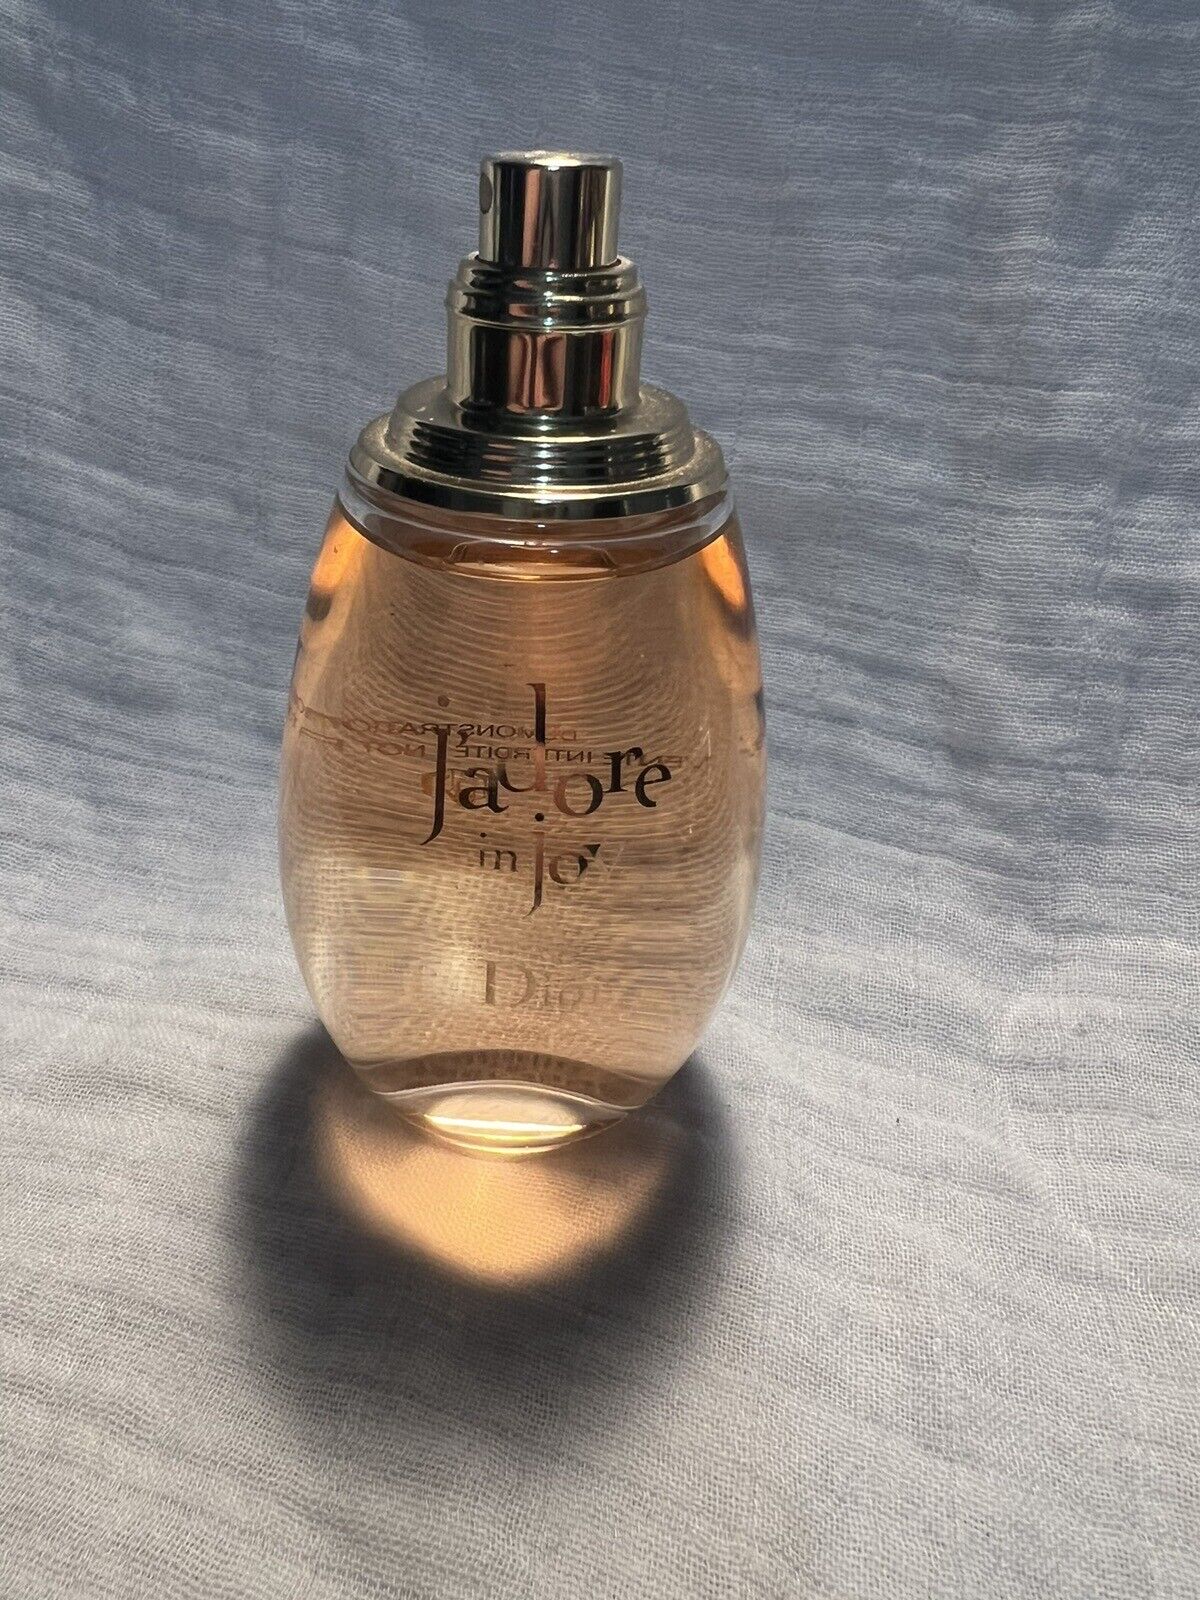 Christian Dior J'Adore In Joy EDT Eau De Toilette Spray 100 ml 3.4 OZ 99.9% FULL